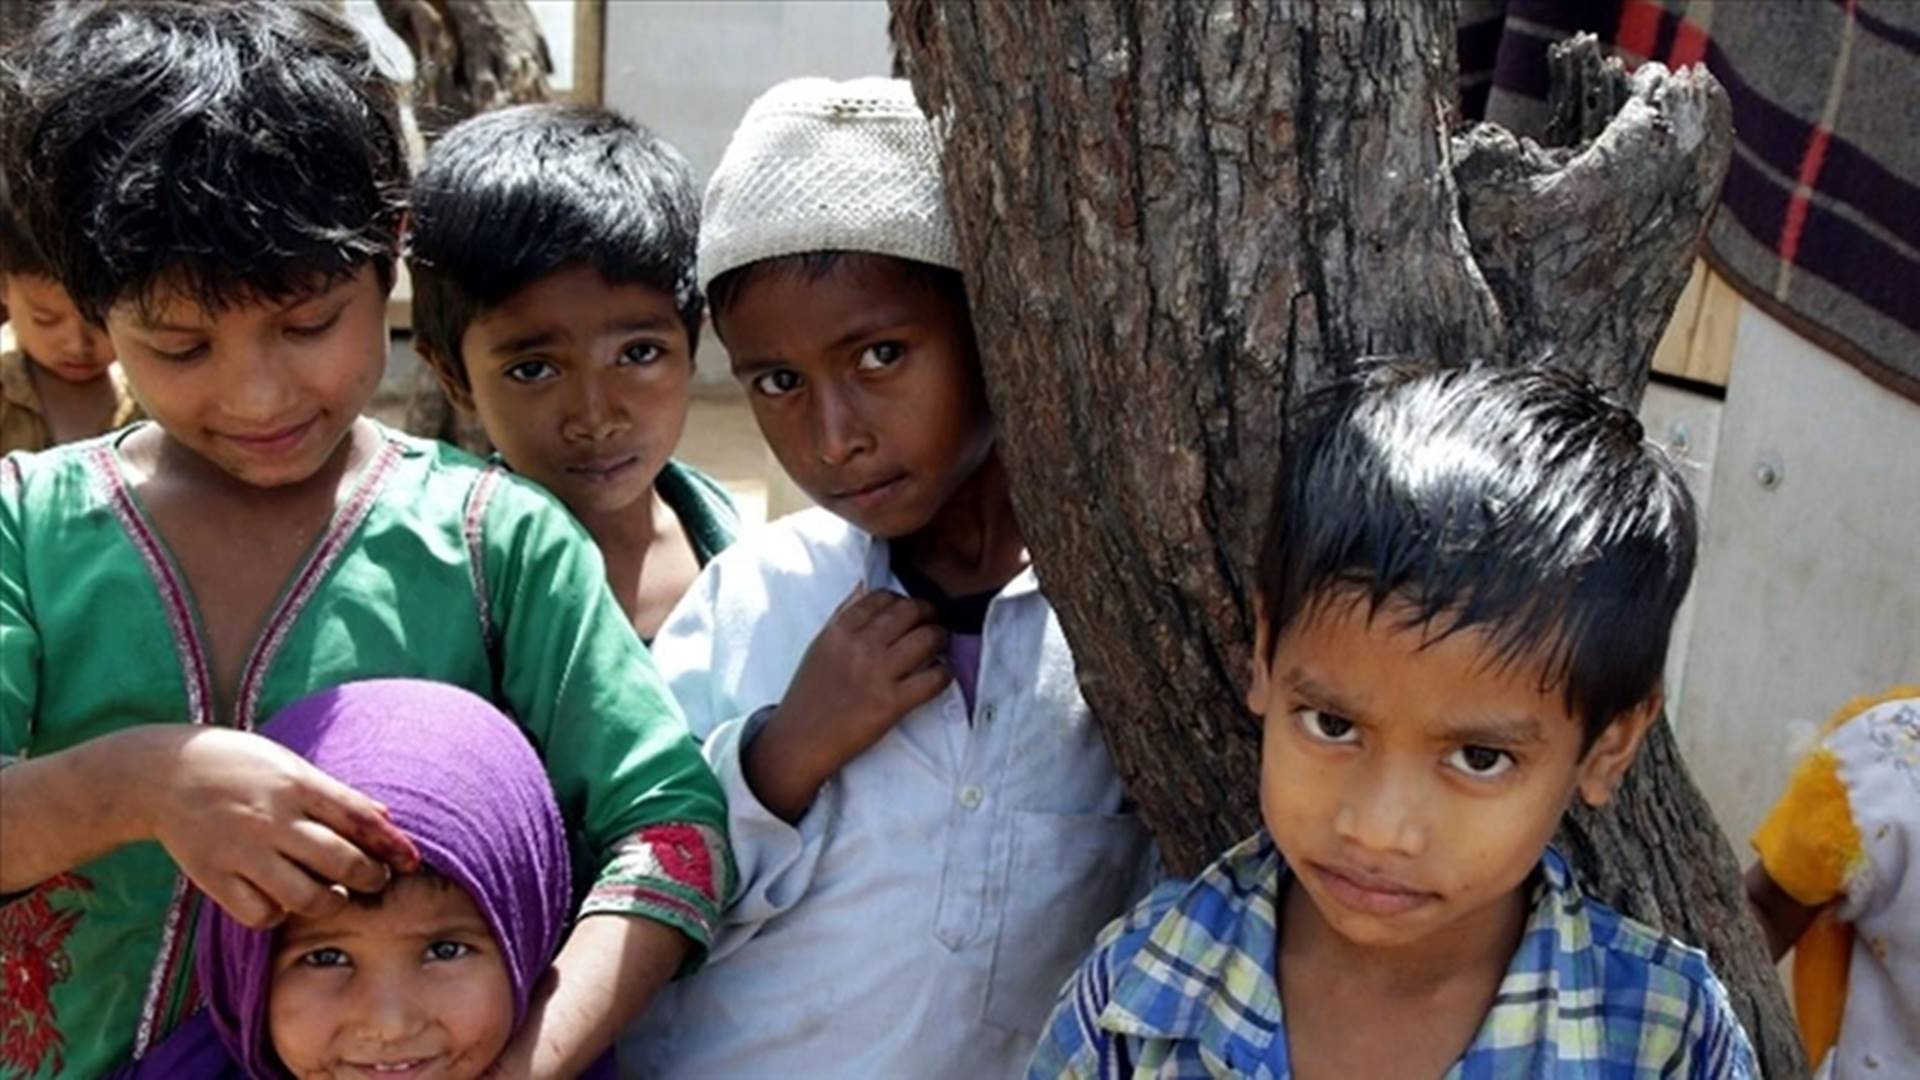 Rohingya in Bangladesh deserve access to education, jobs: UN